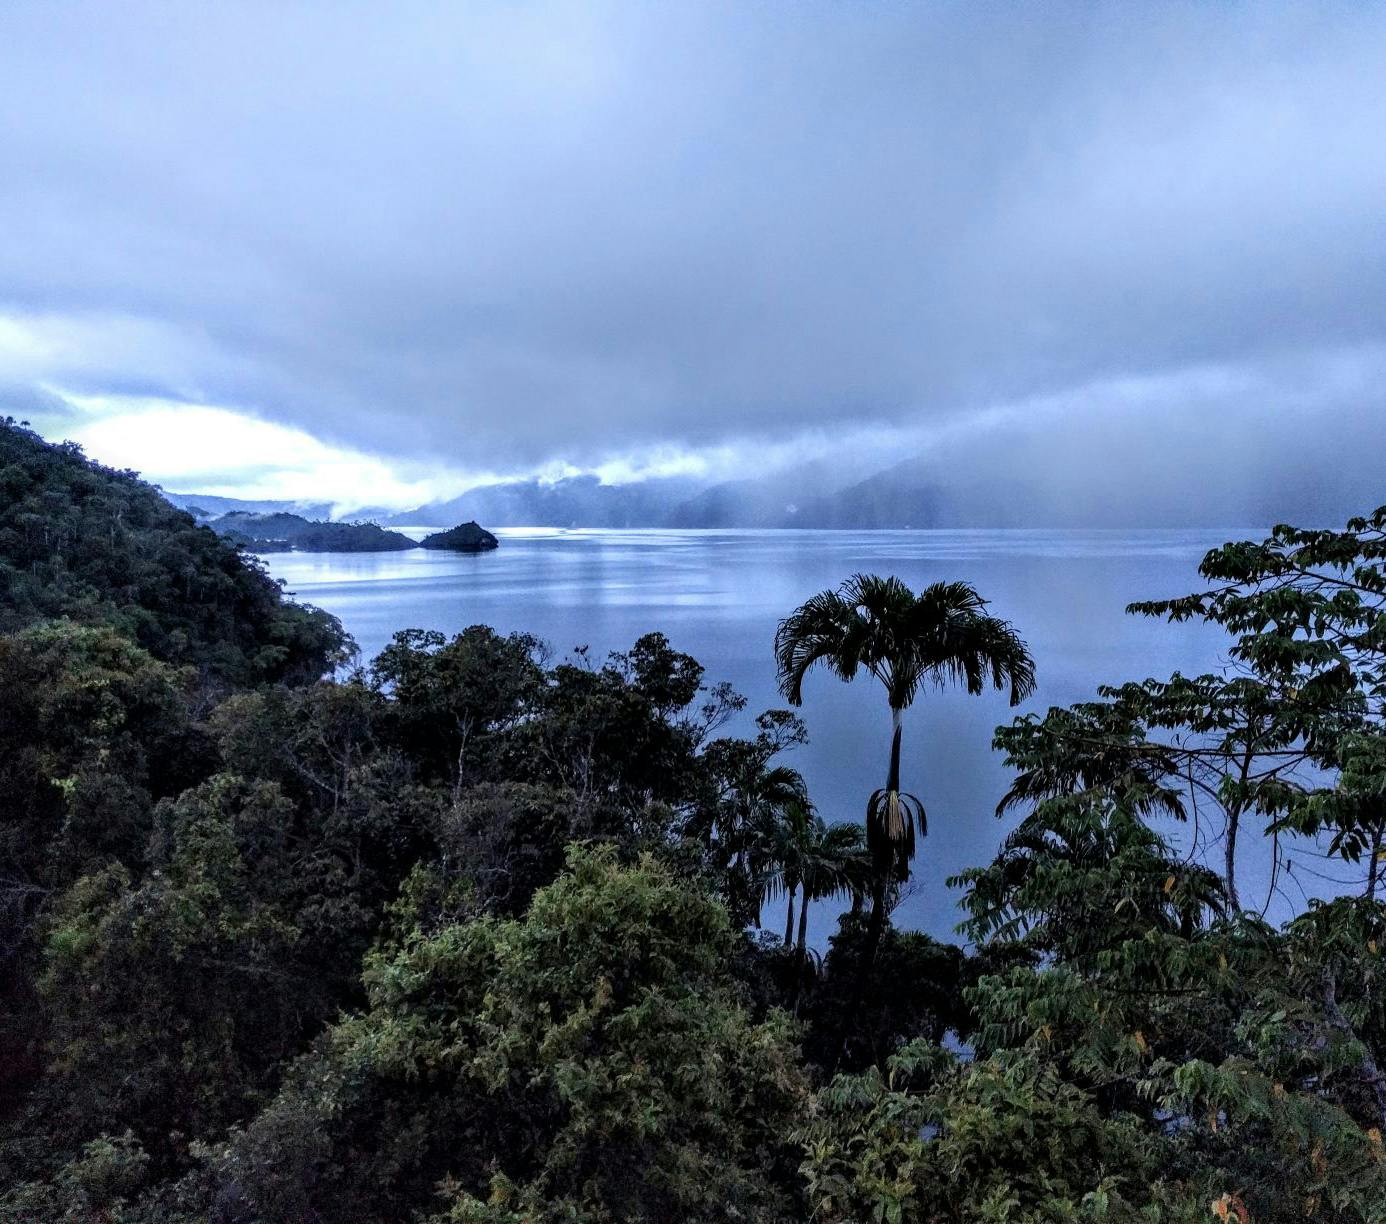 View over Lake Kutubu in Papua New Guinea.